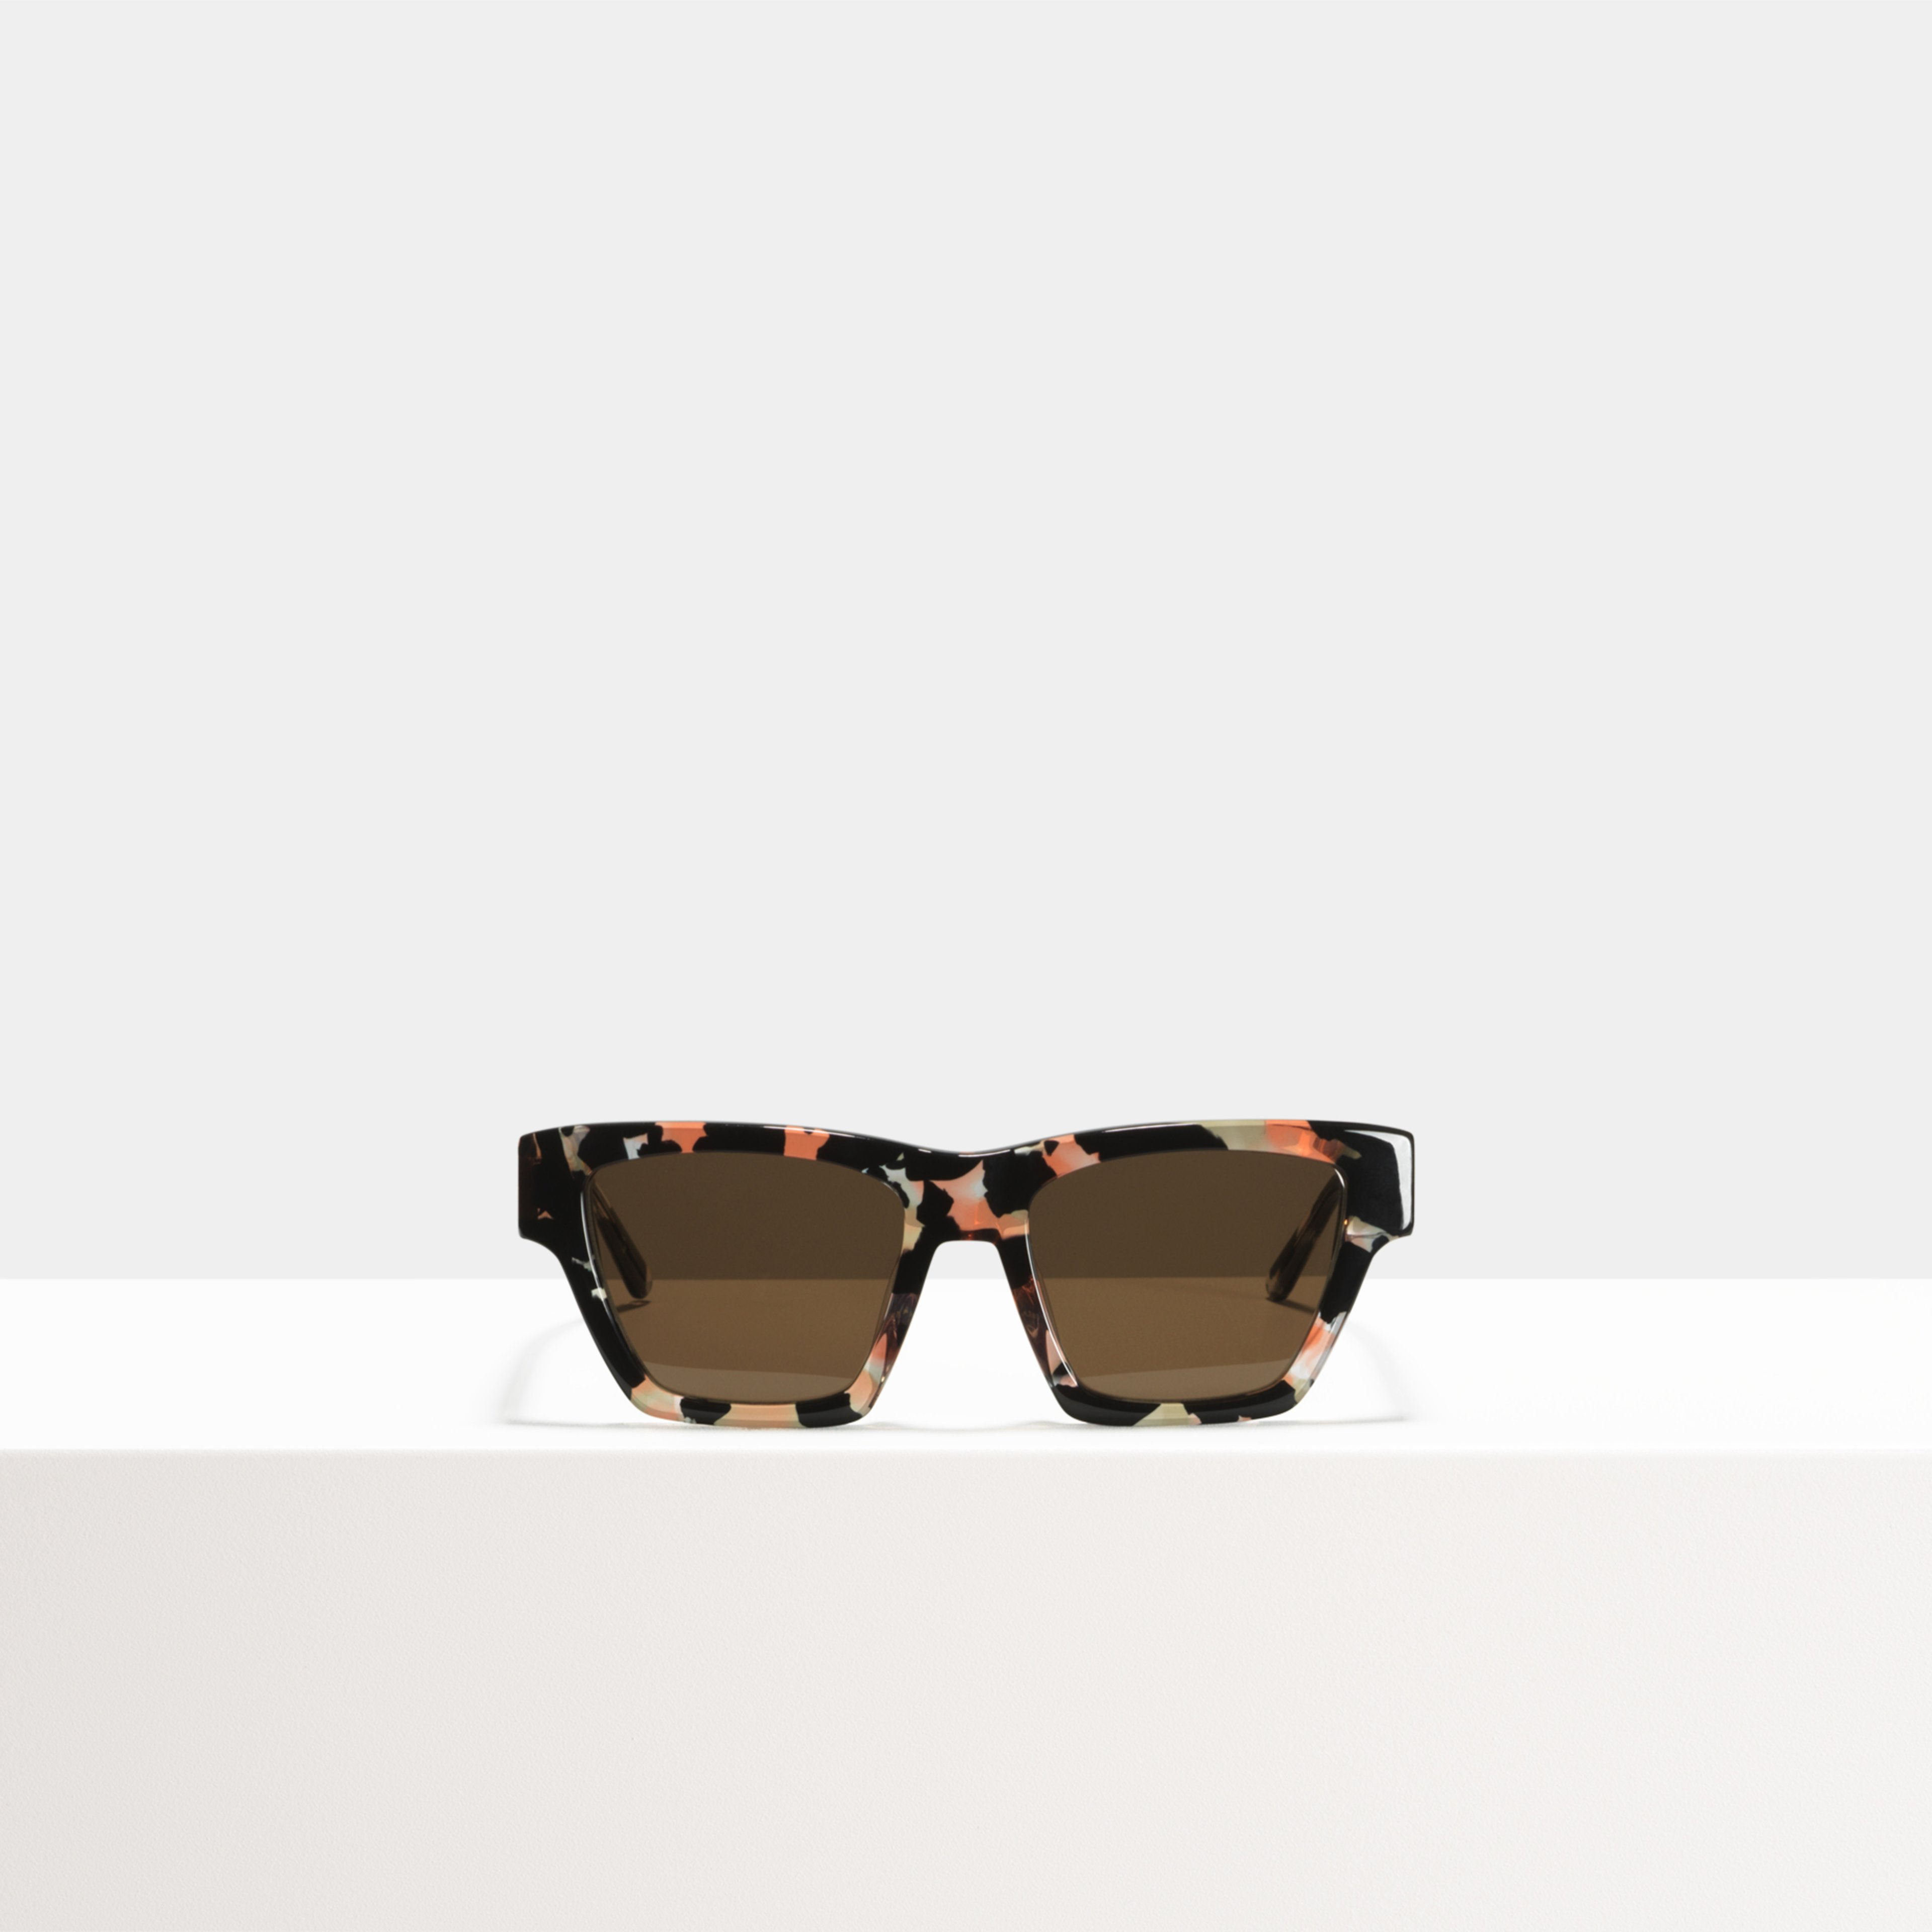 Ace & Tate Sunglasses | Square Acetate in Pink